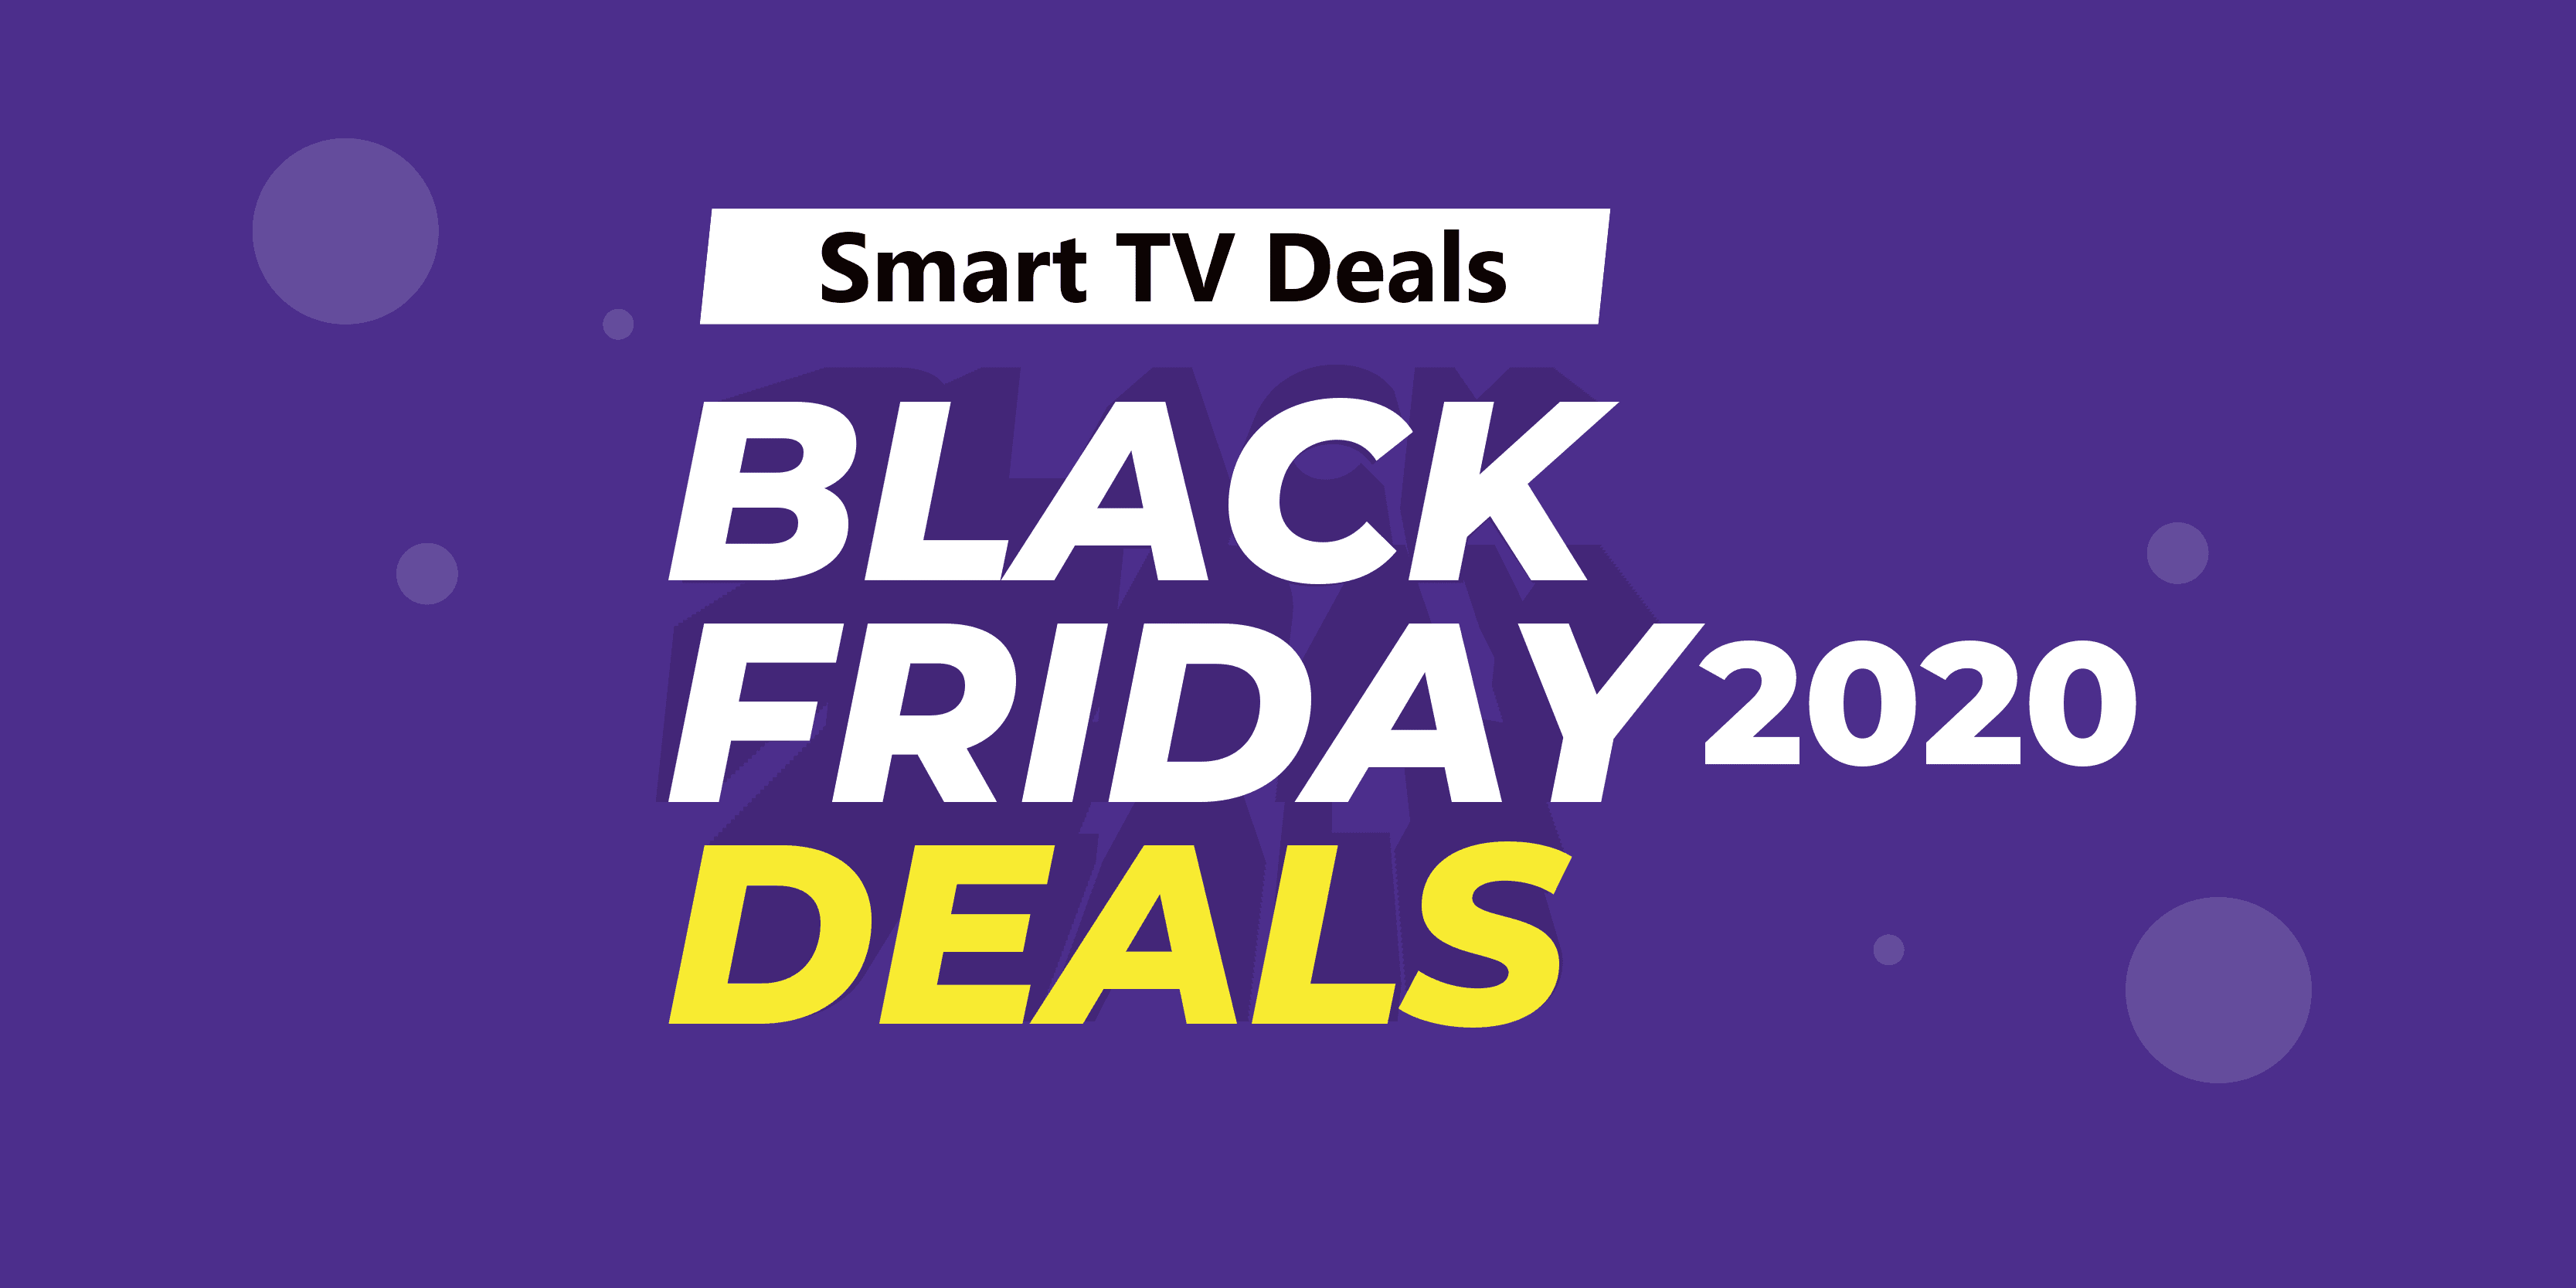 Smart TV Black Friday Deals (2020) On Amazon